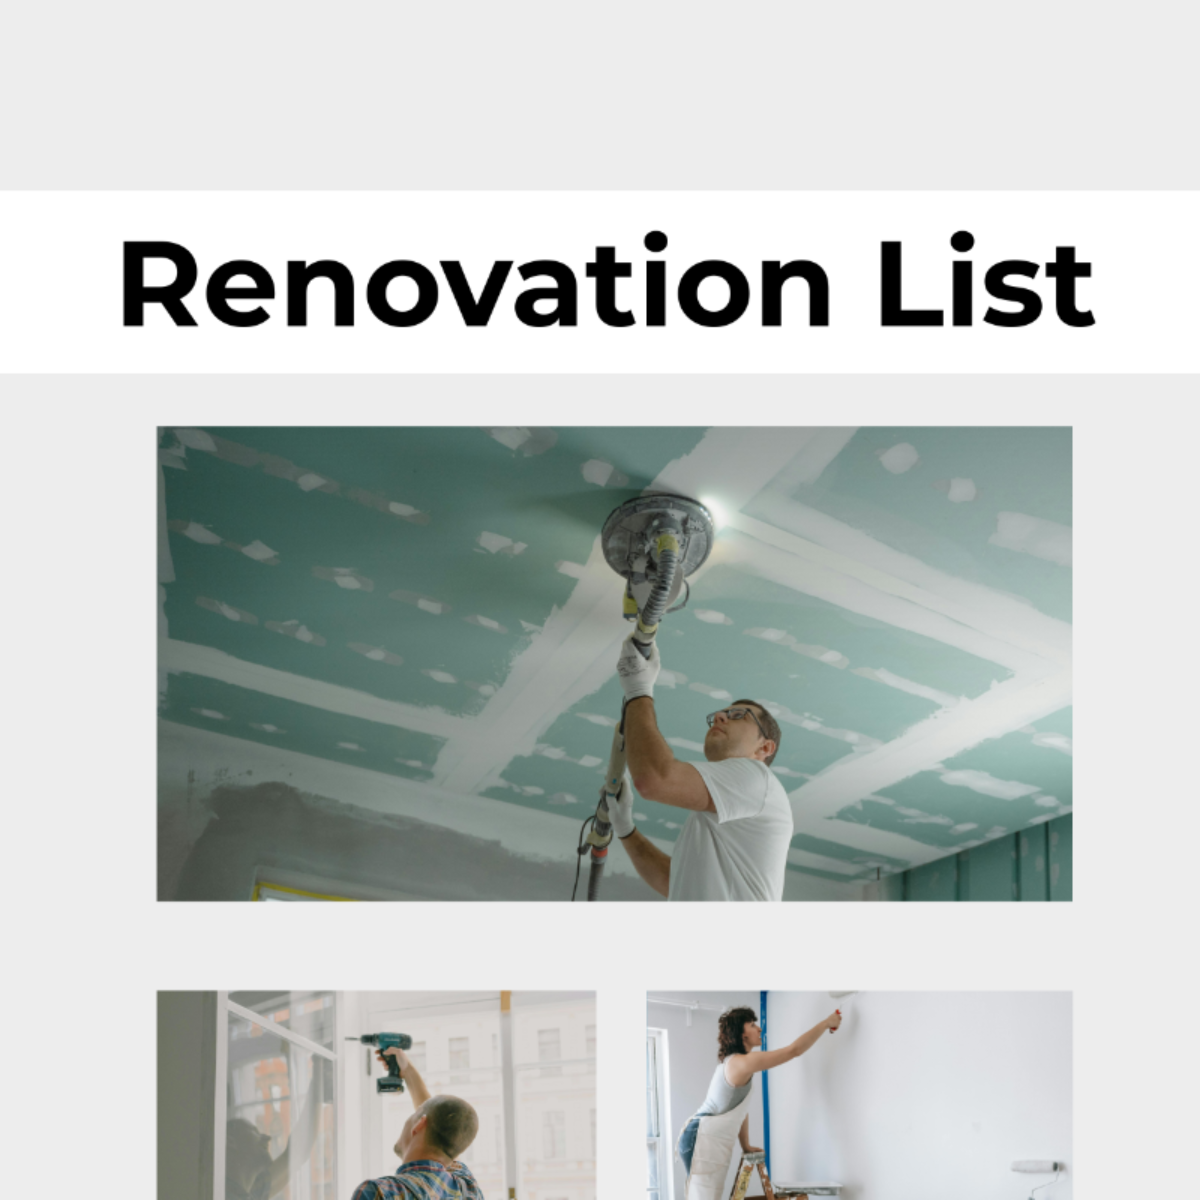 Renovation List Template